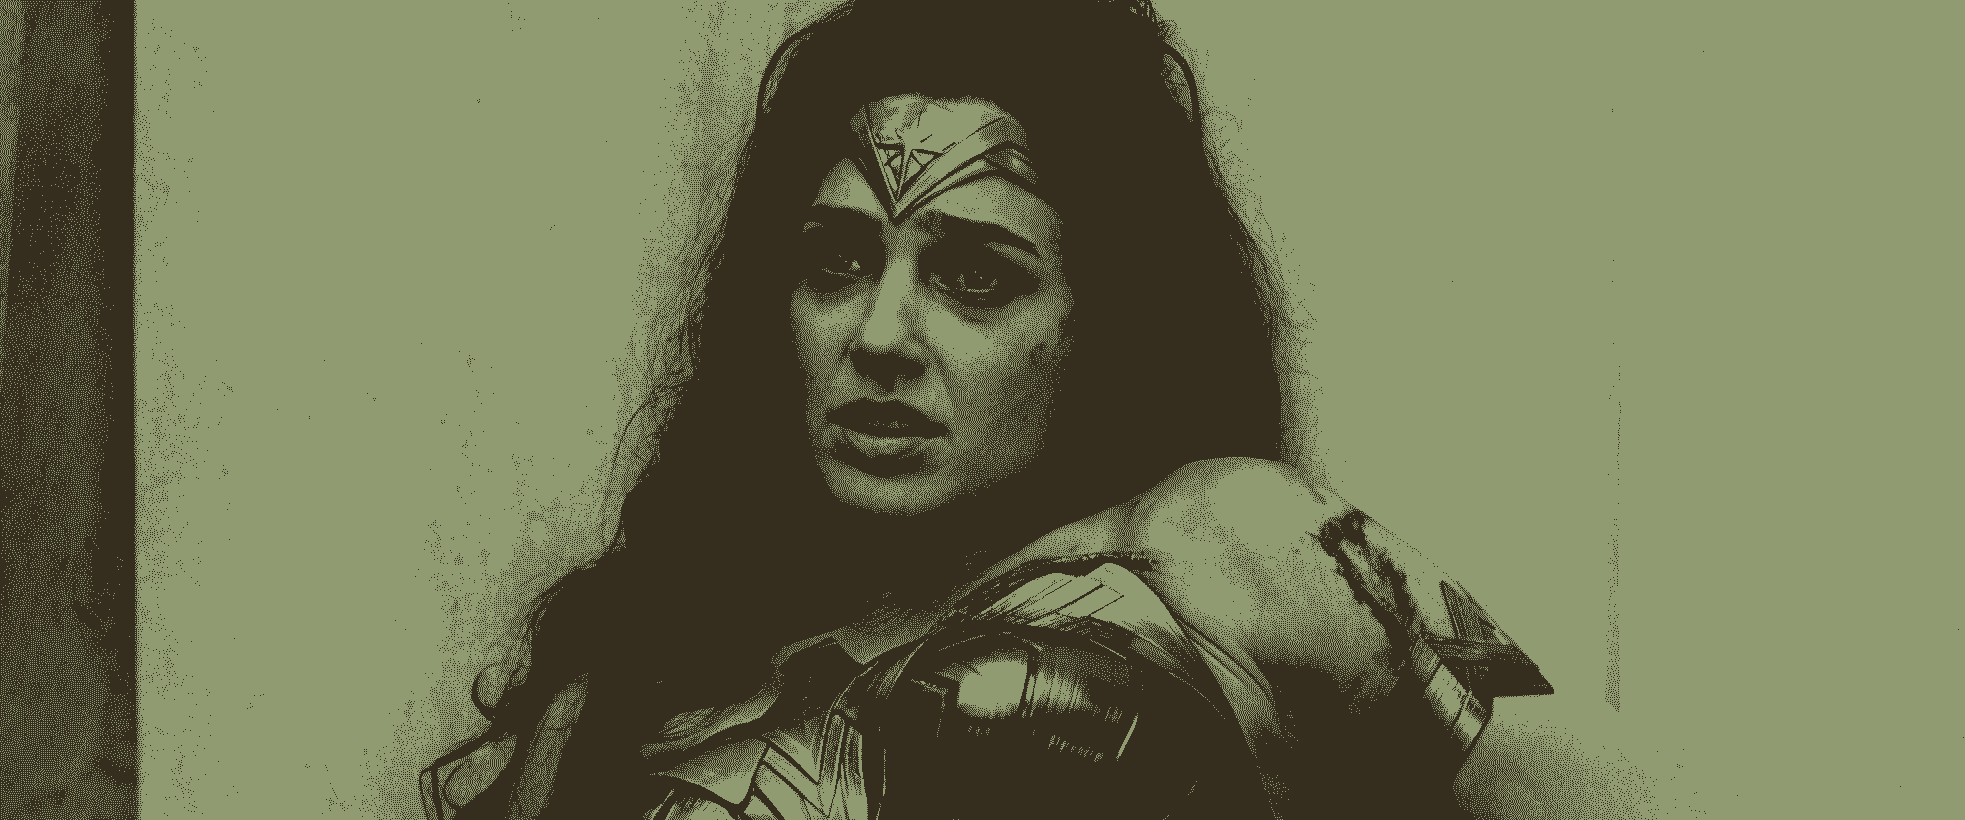 screenshot of Wonder Woman 1984